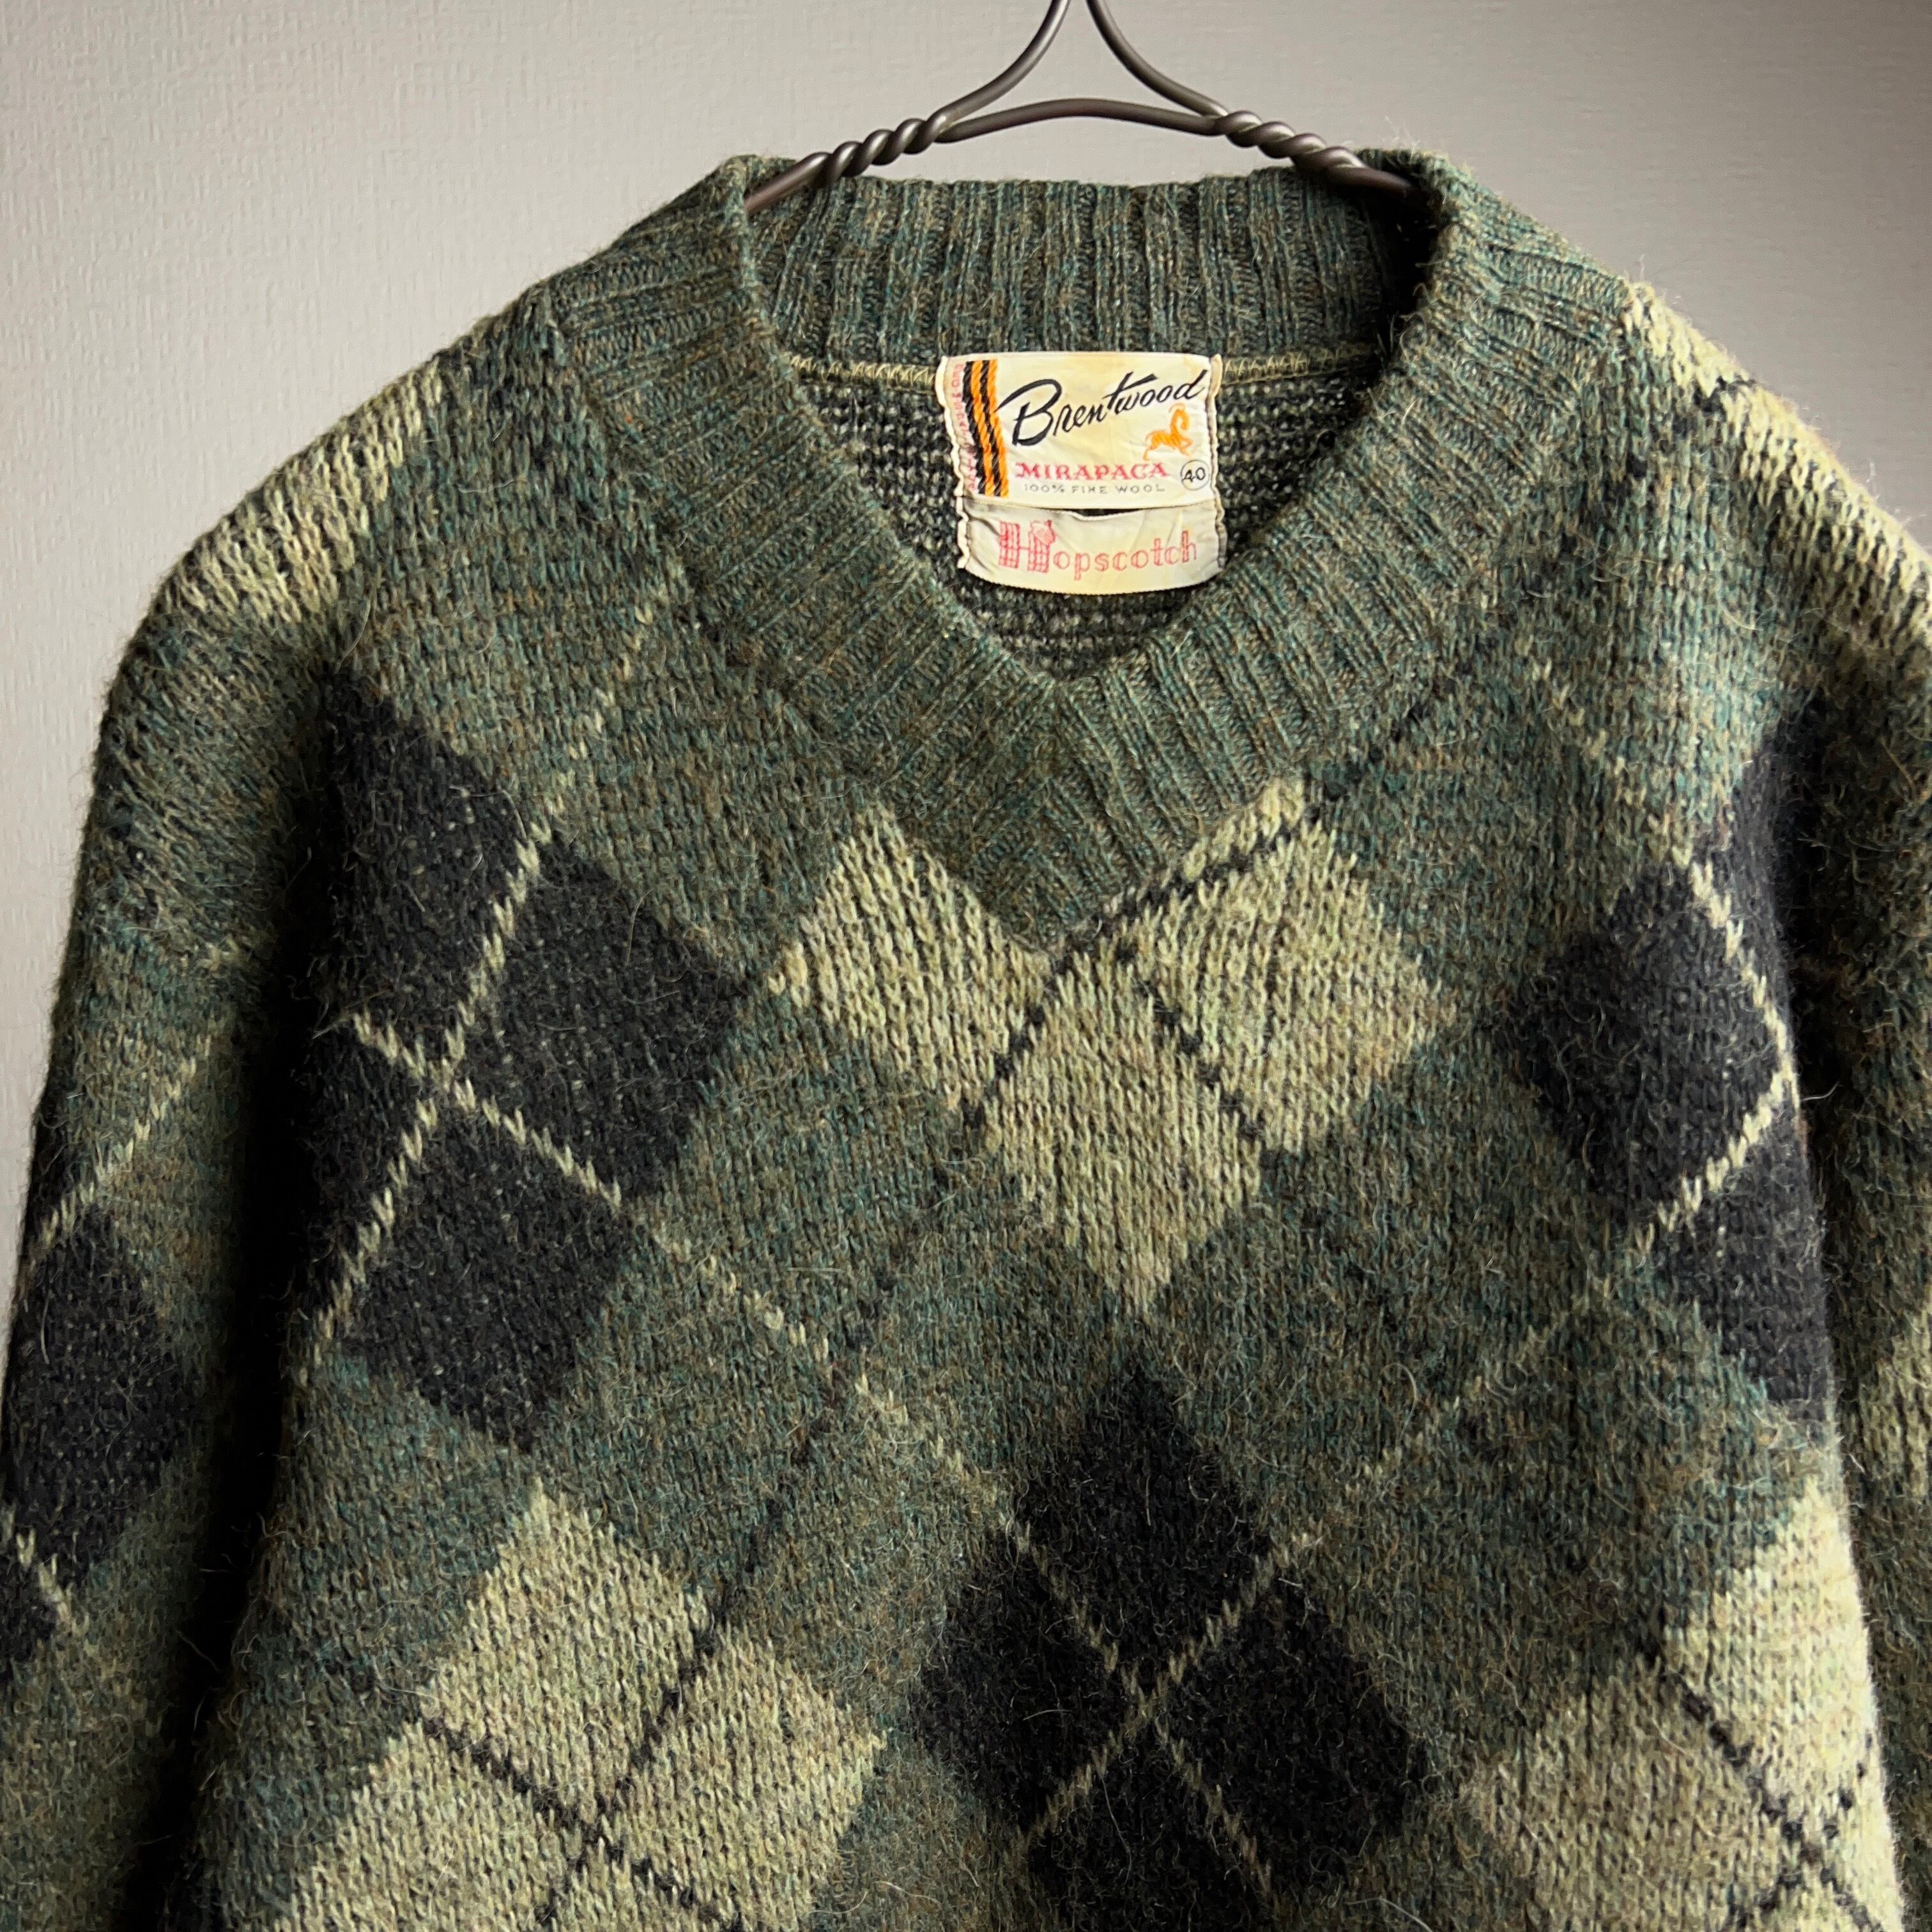 60's Brentwood Argyle Wool Knit Sweater 60年代 アーガイル柄 ウールニット  セーター【1000A94】【送料無料】